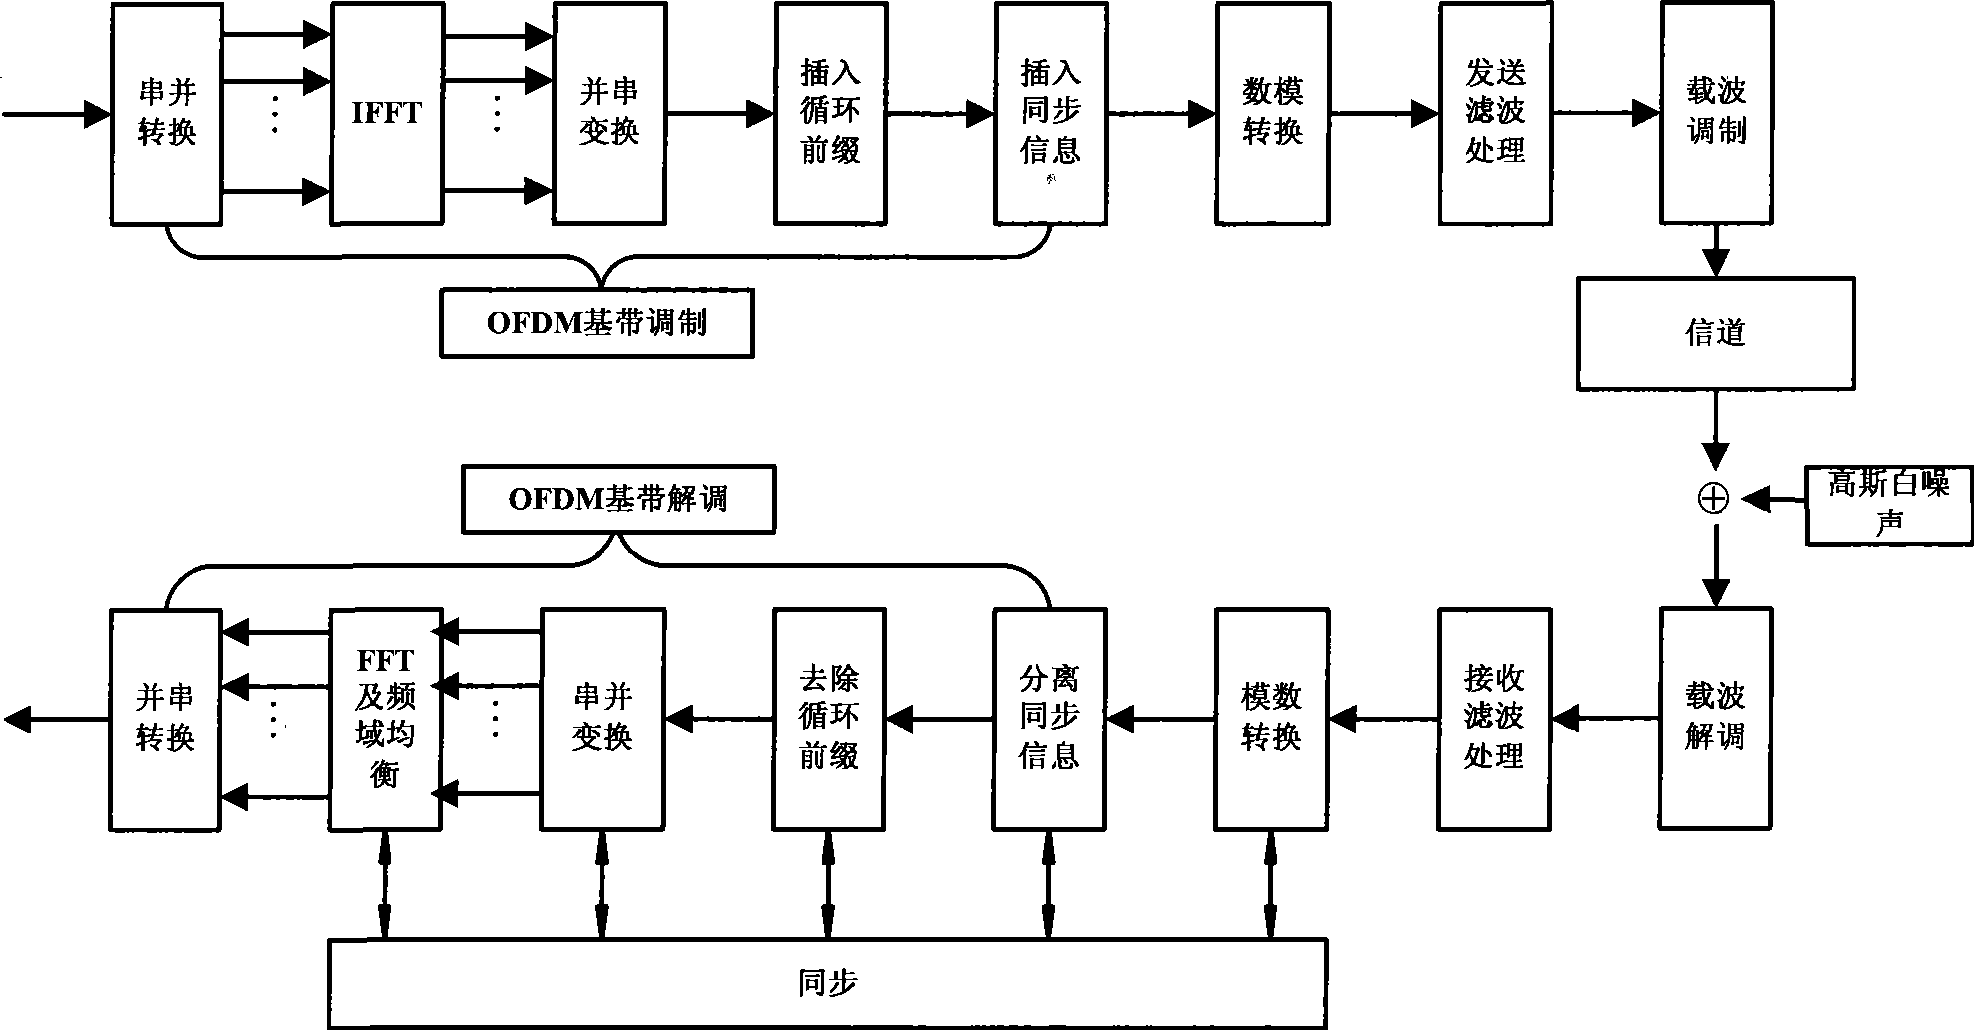 OFDM synchronization method based on four dimensional chaos system